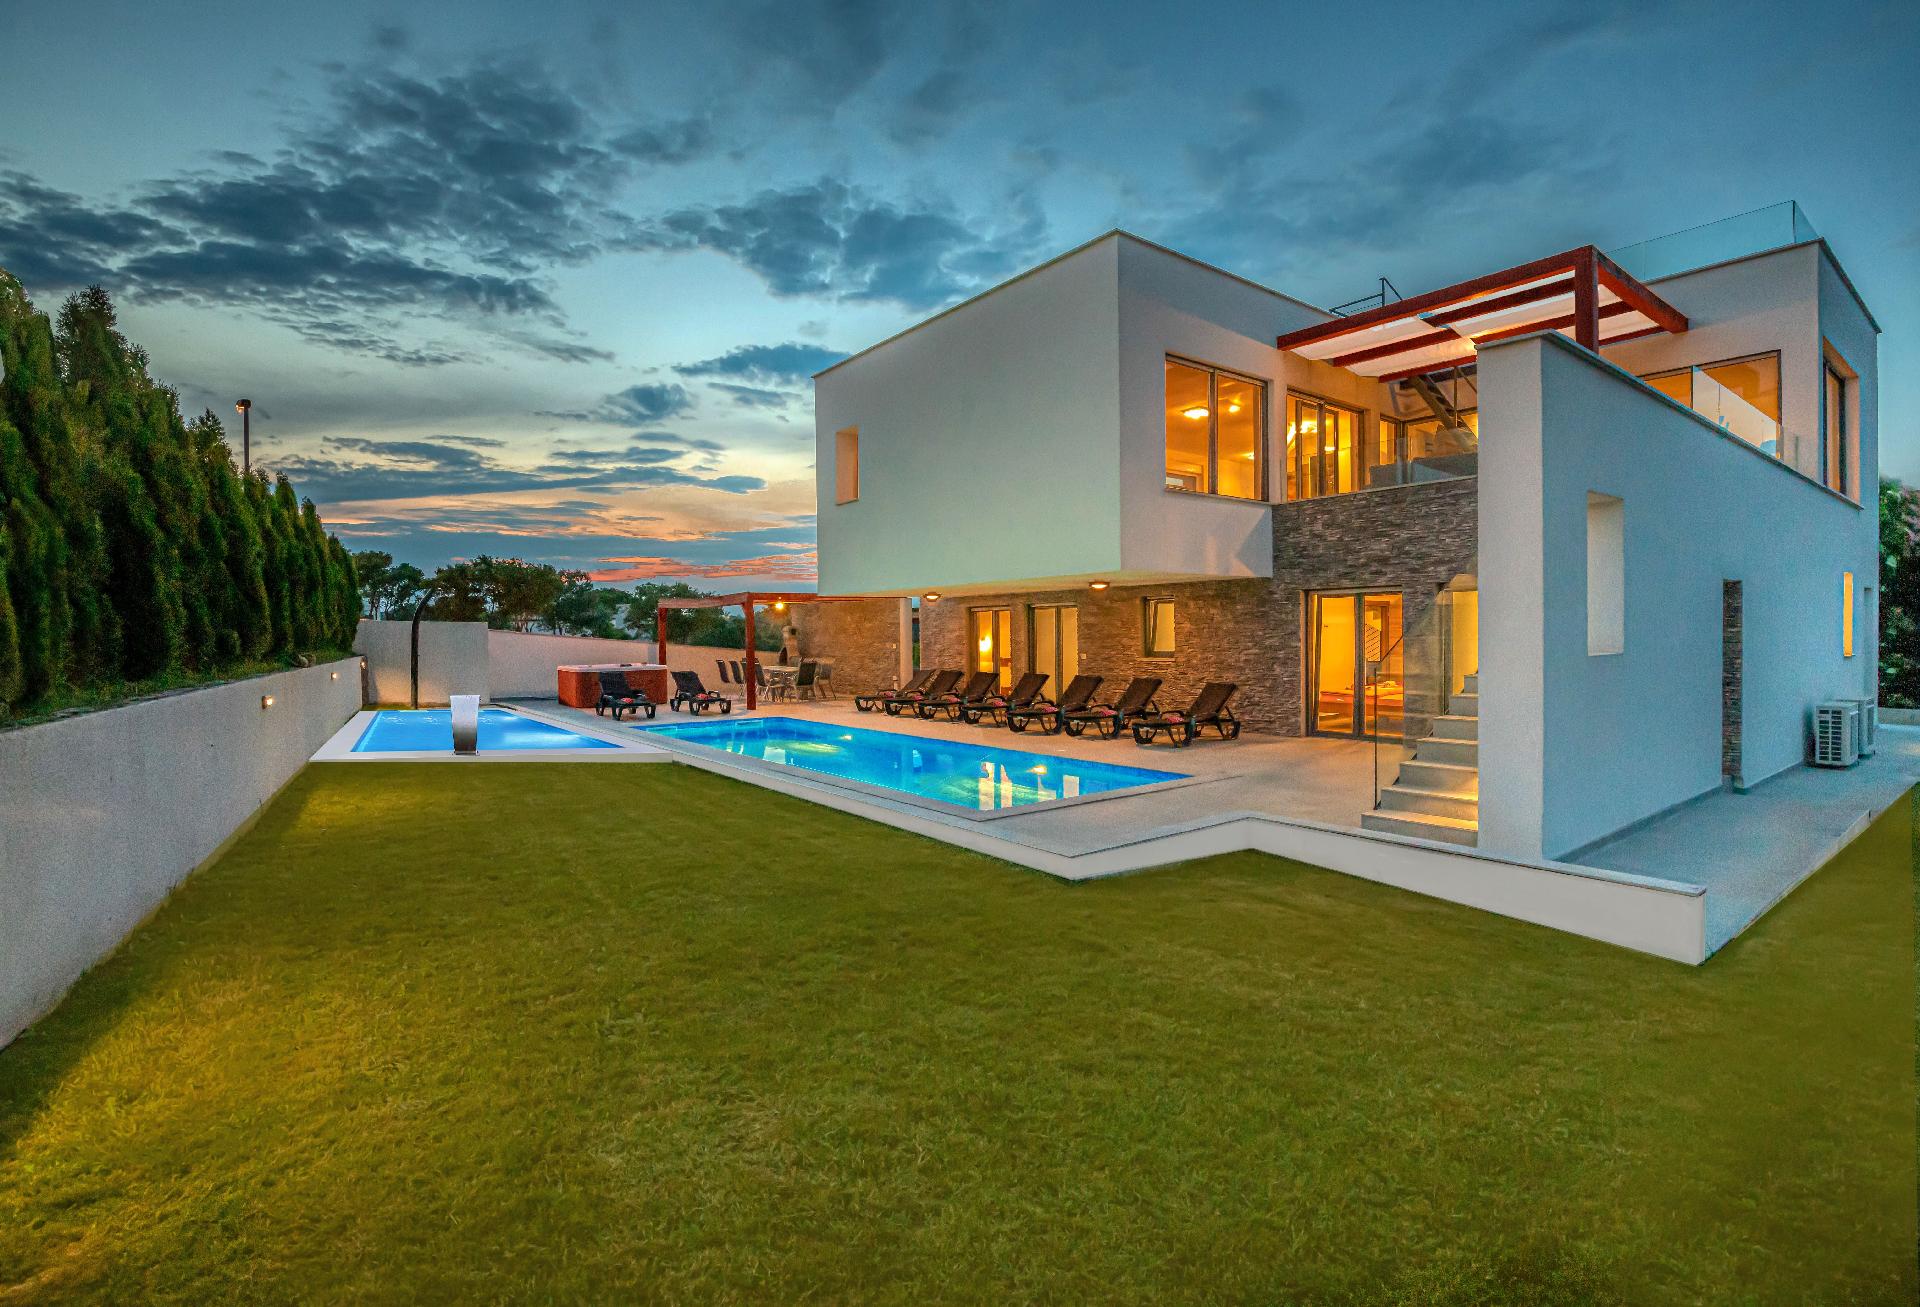 Leons Holiday Homes Villa 3 am Meer mit 2 Pools Ferienhaus in Istrien